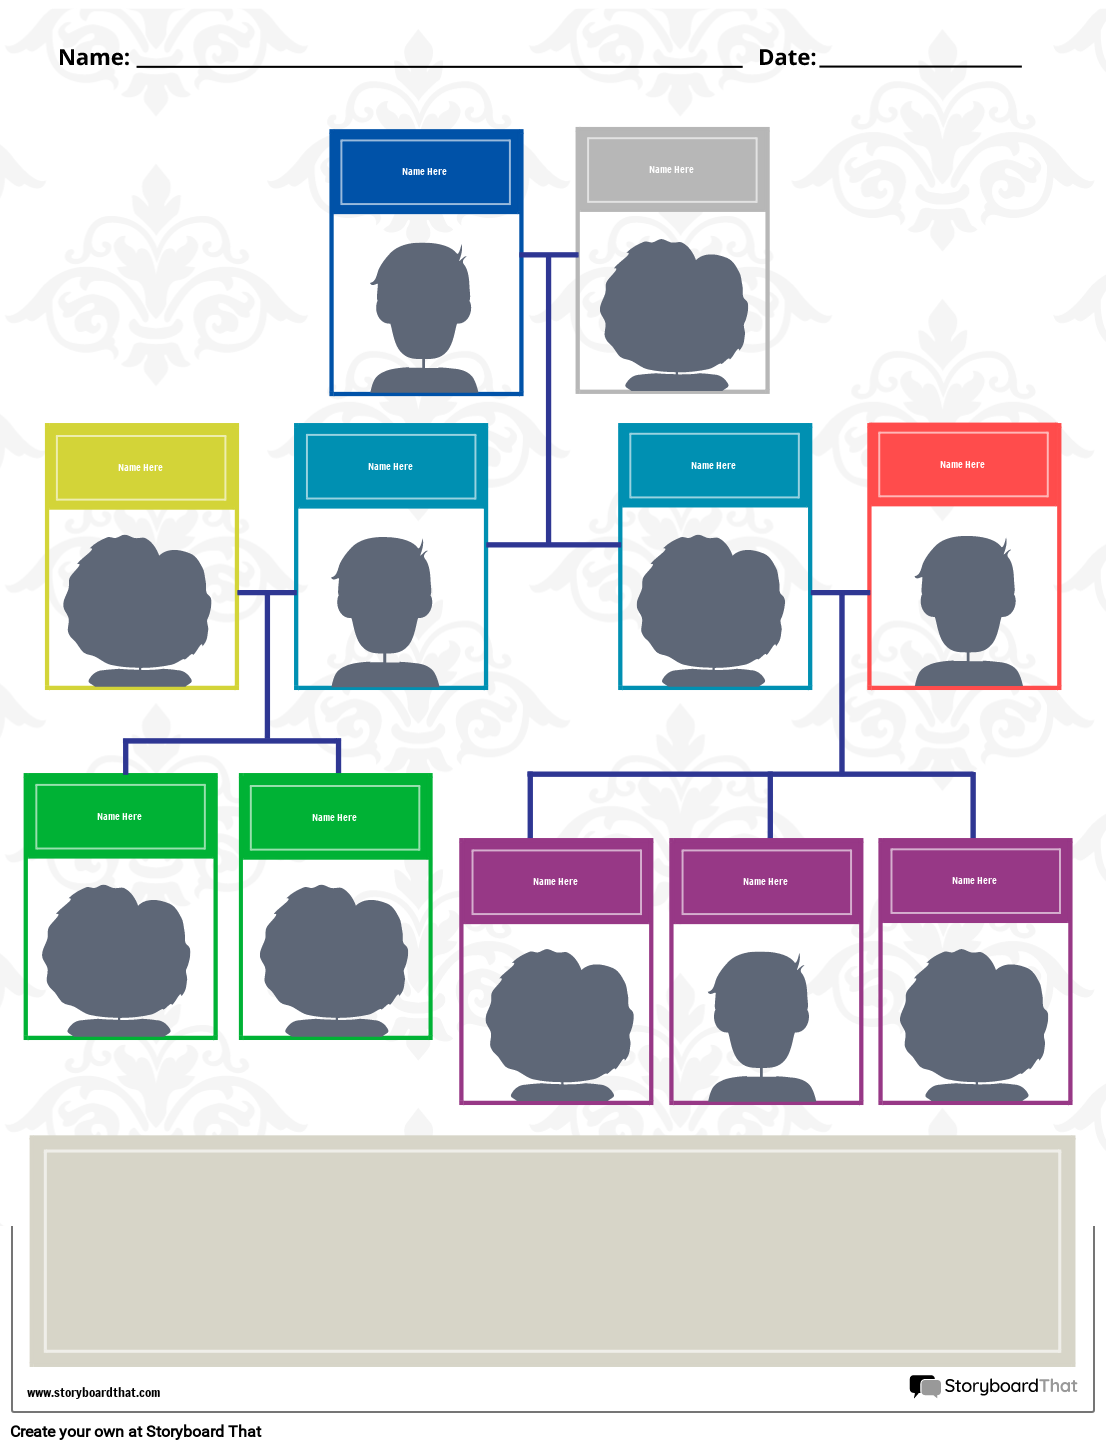 simple family trees worksheet